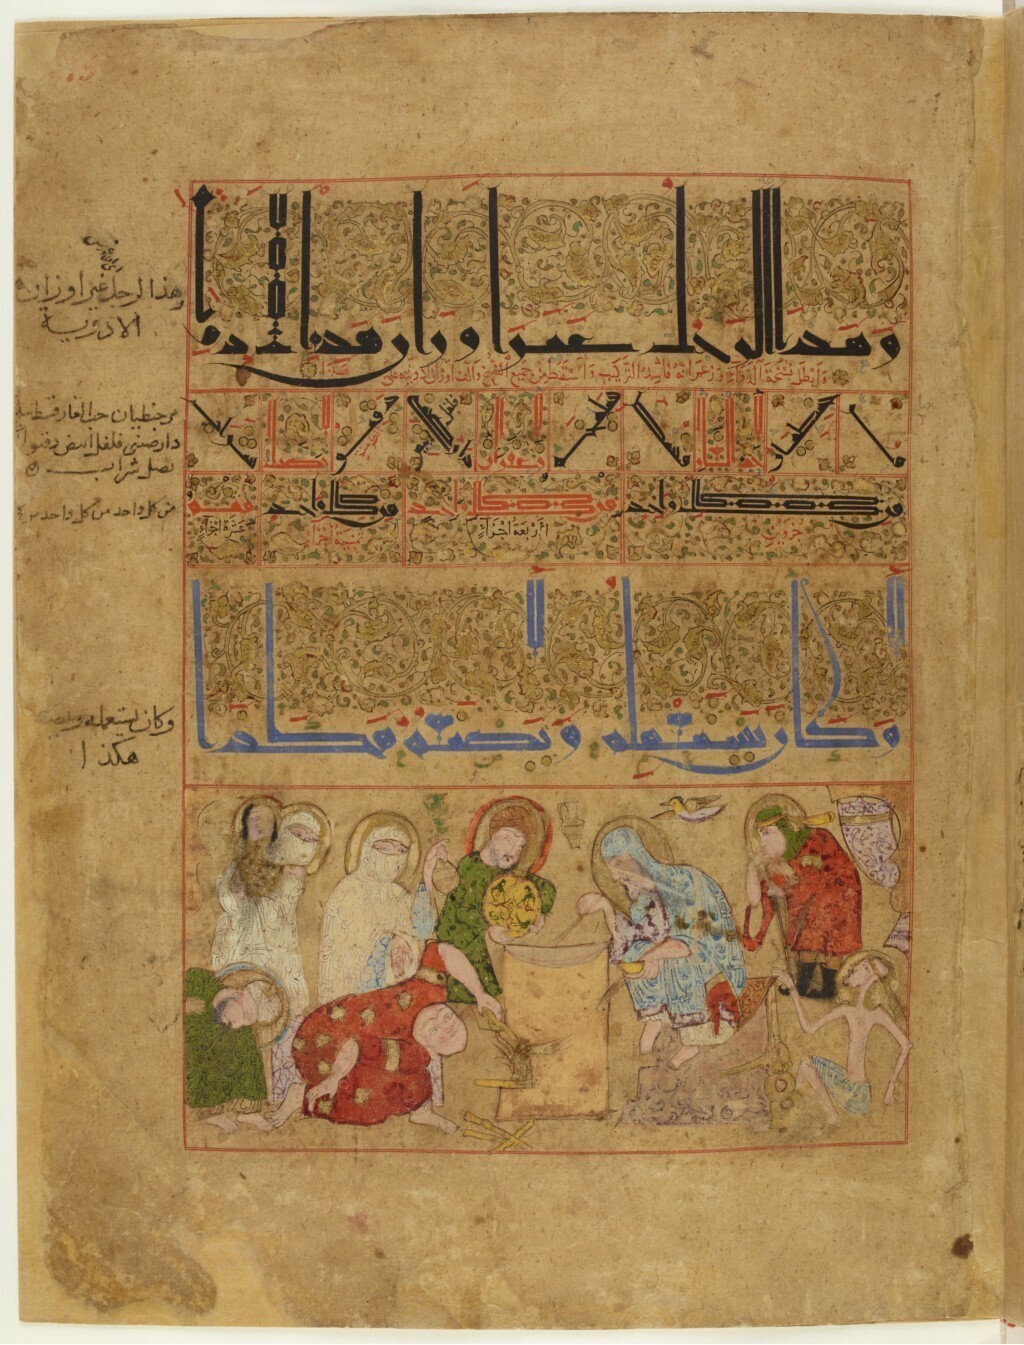 the Kitab al-Diryaq